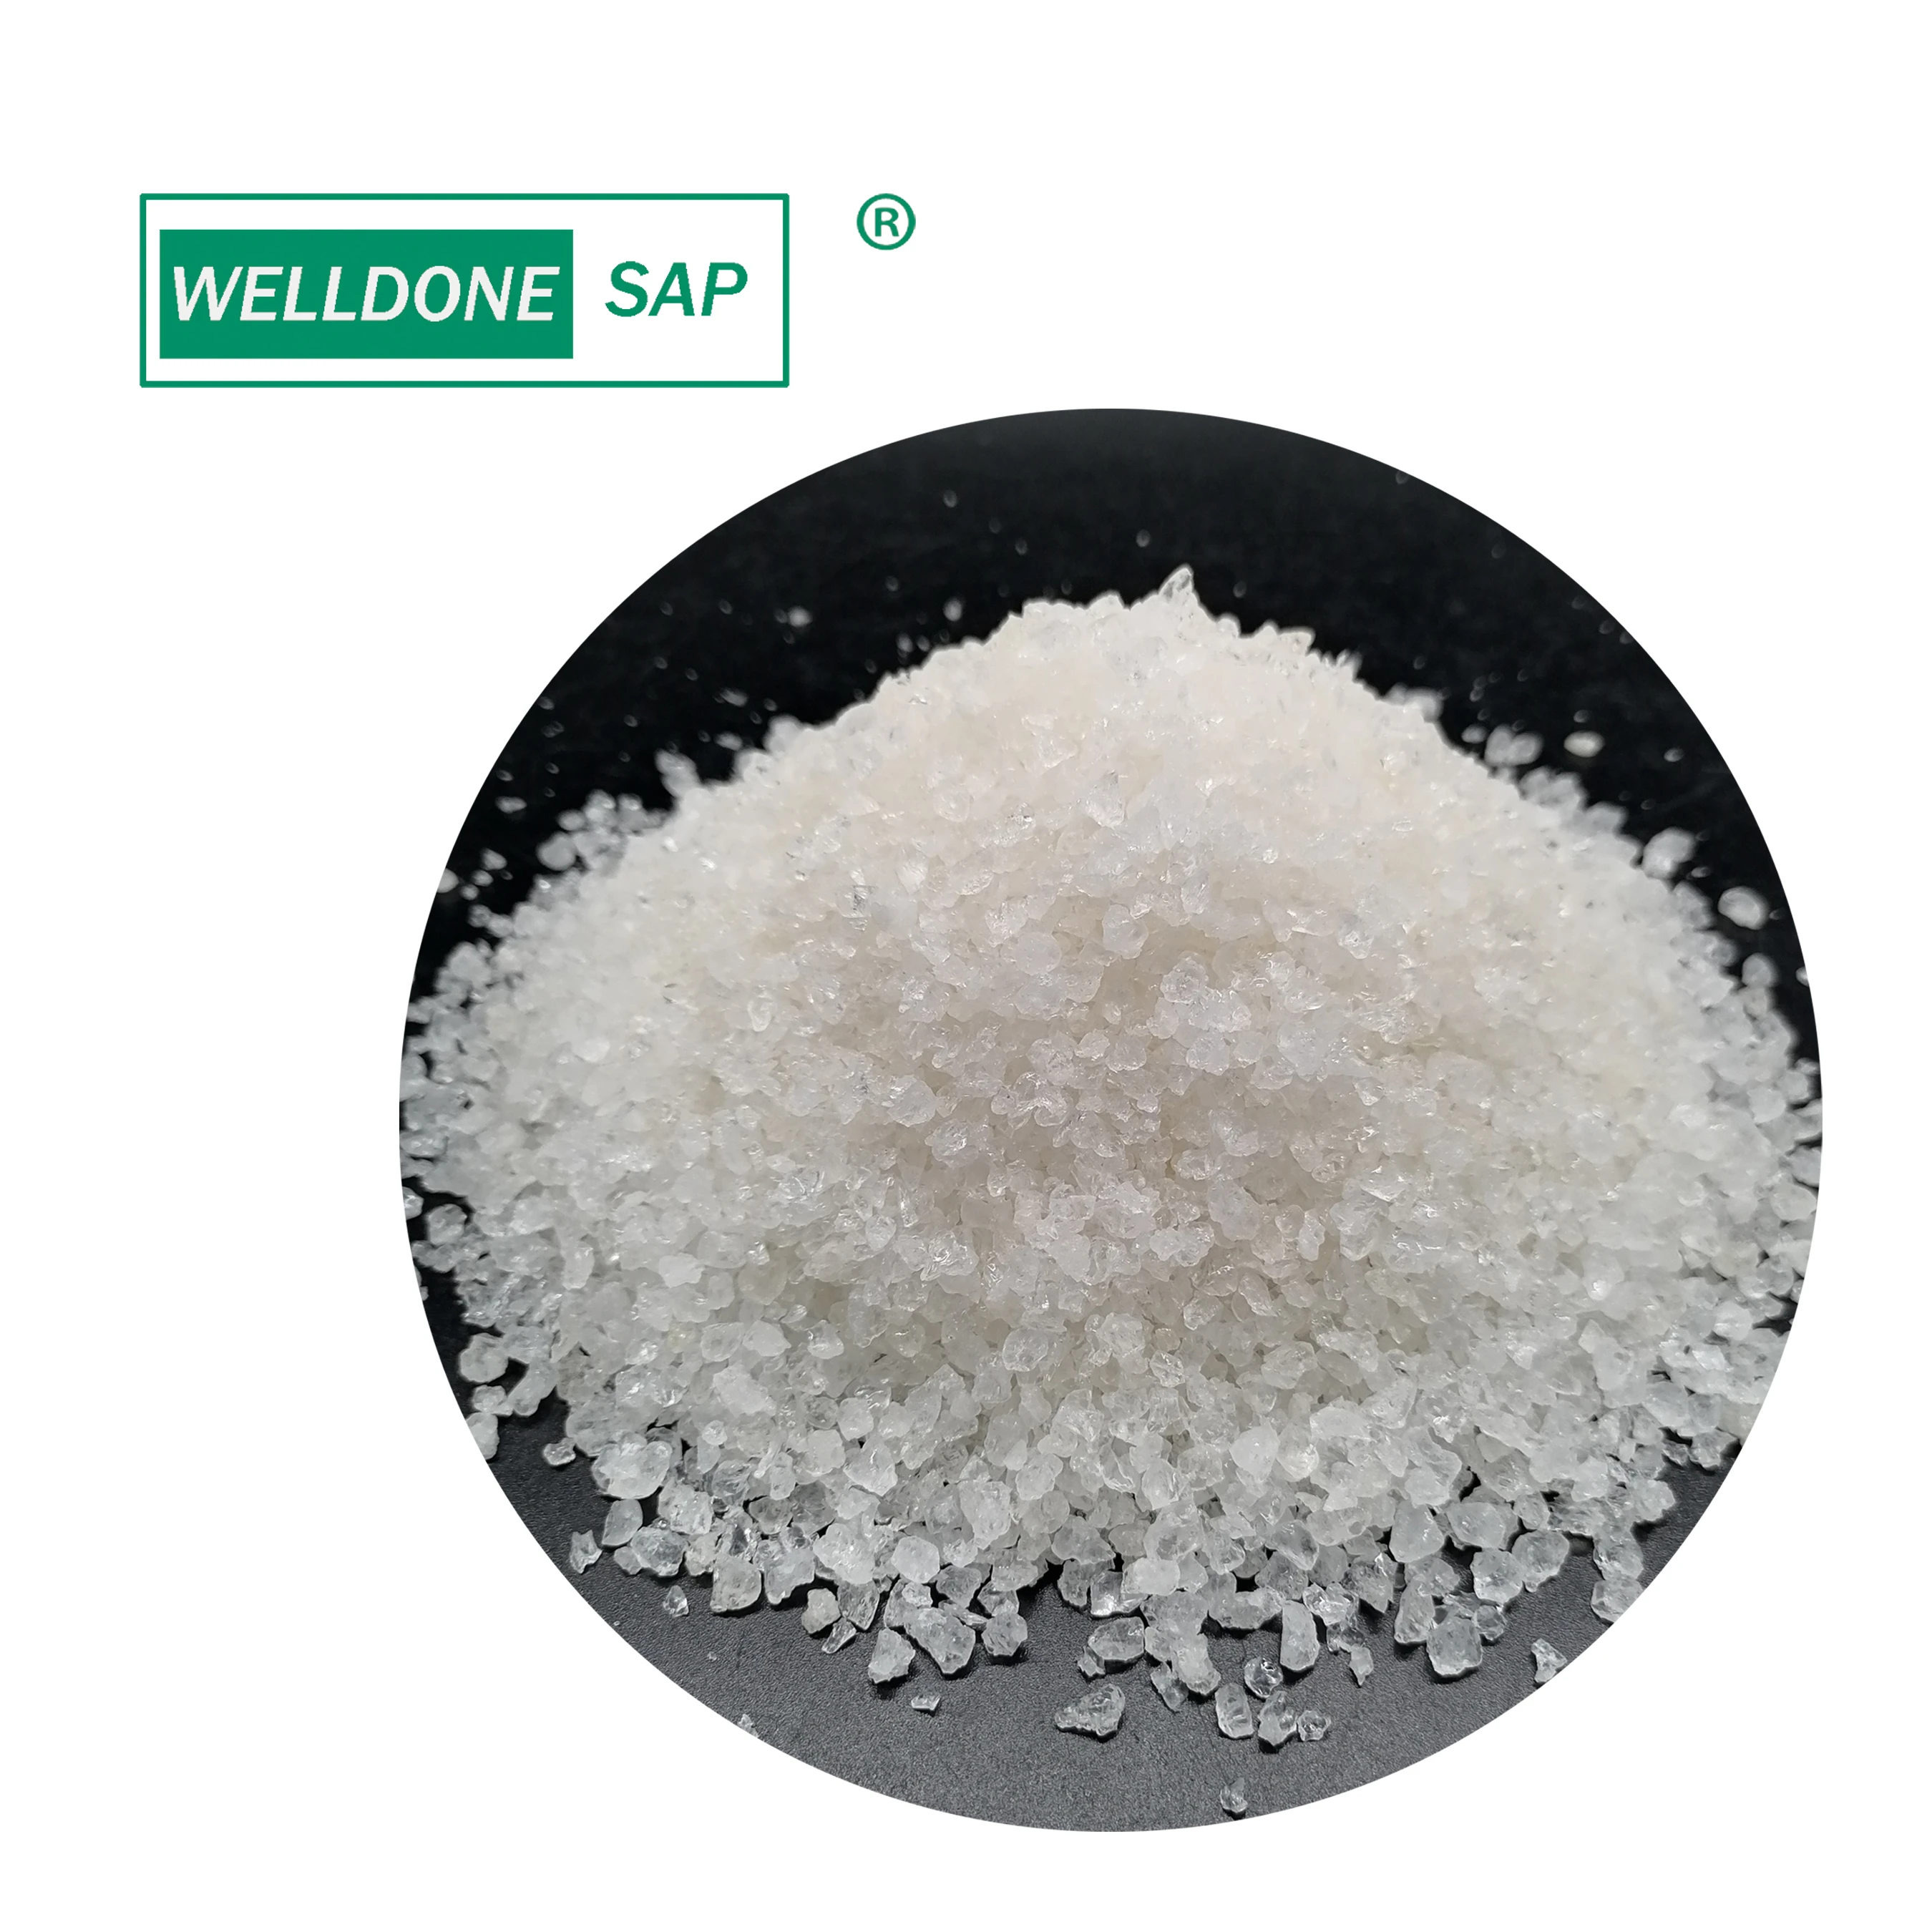 WELLDONE SAP Absorbent Polymer Gel Crystals Save Agricultural Fertilizers